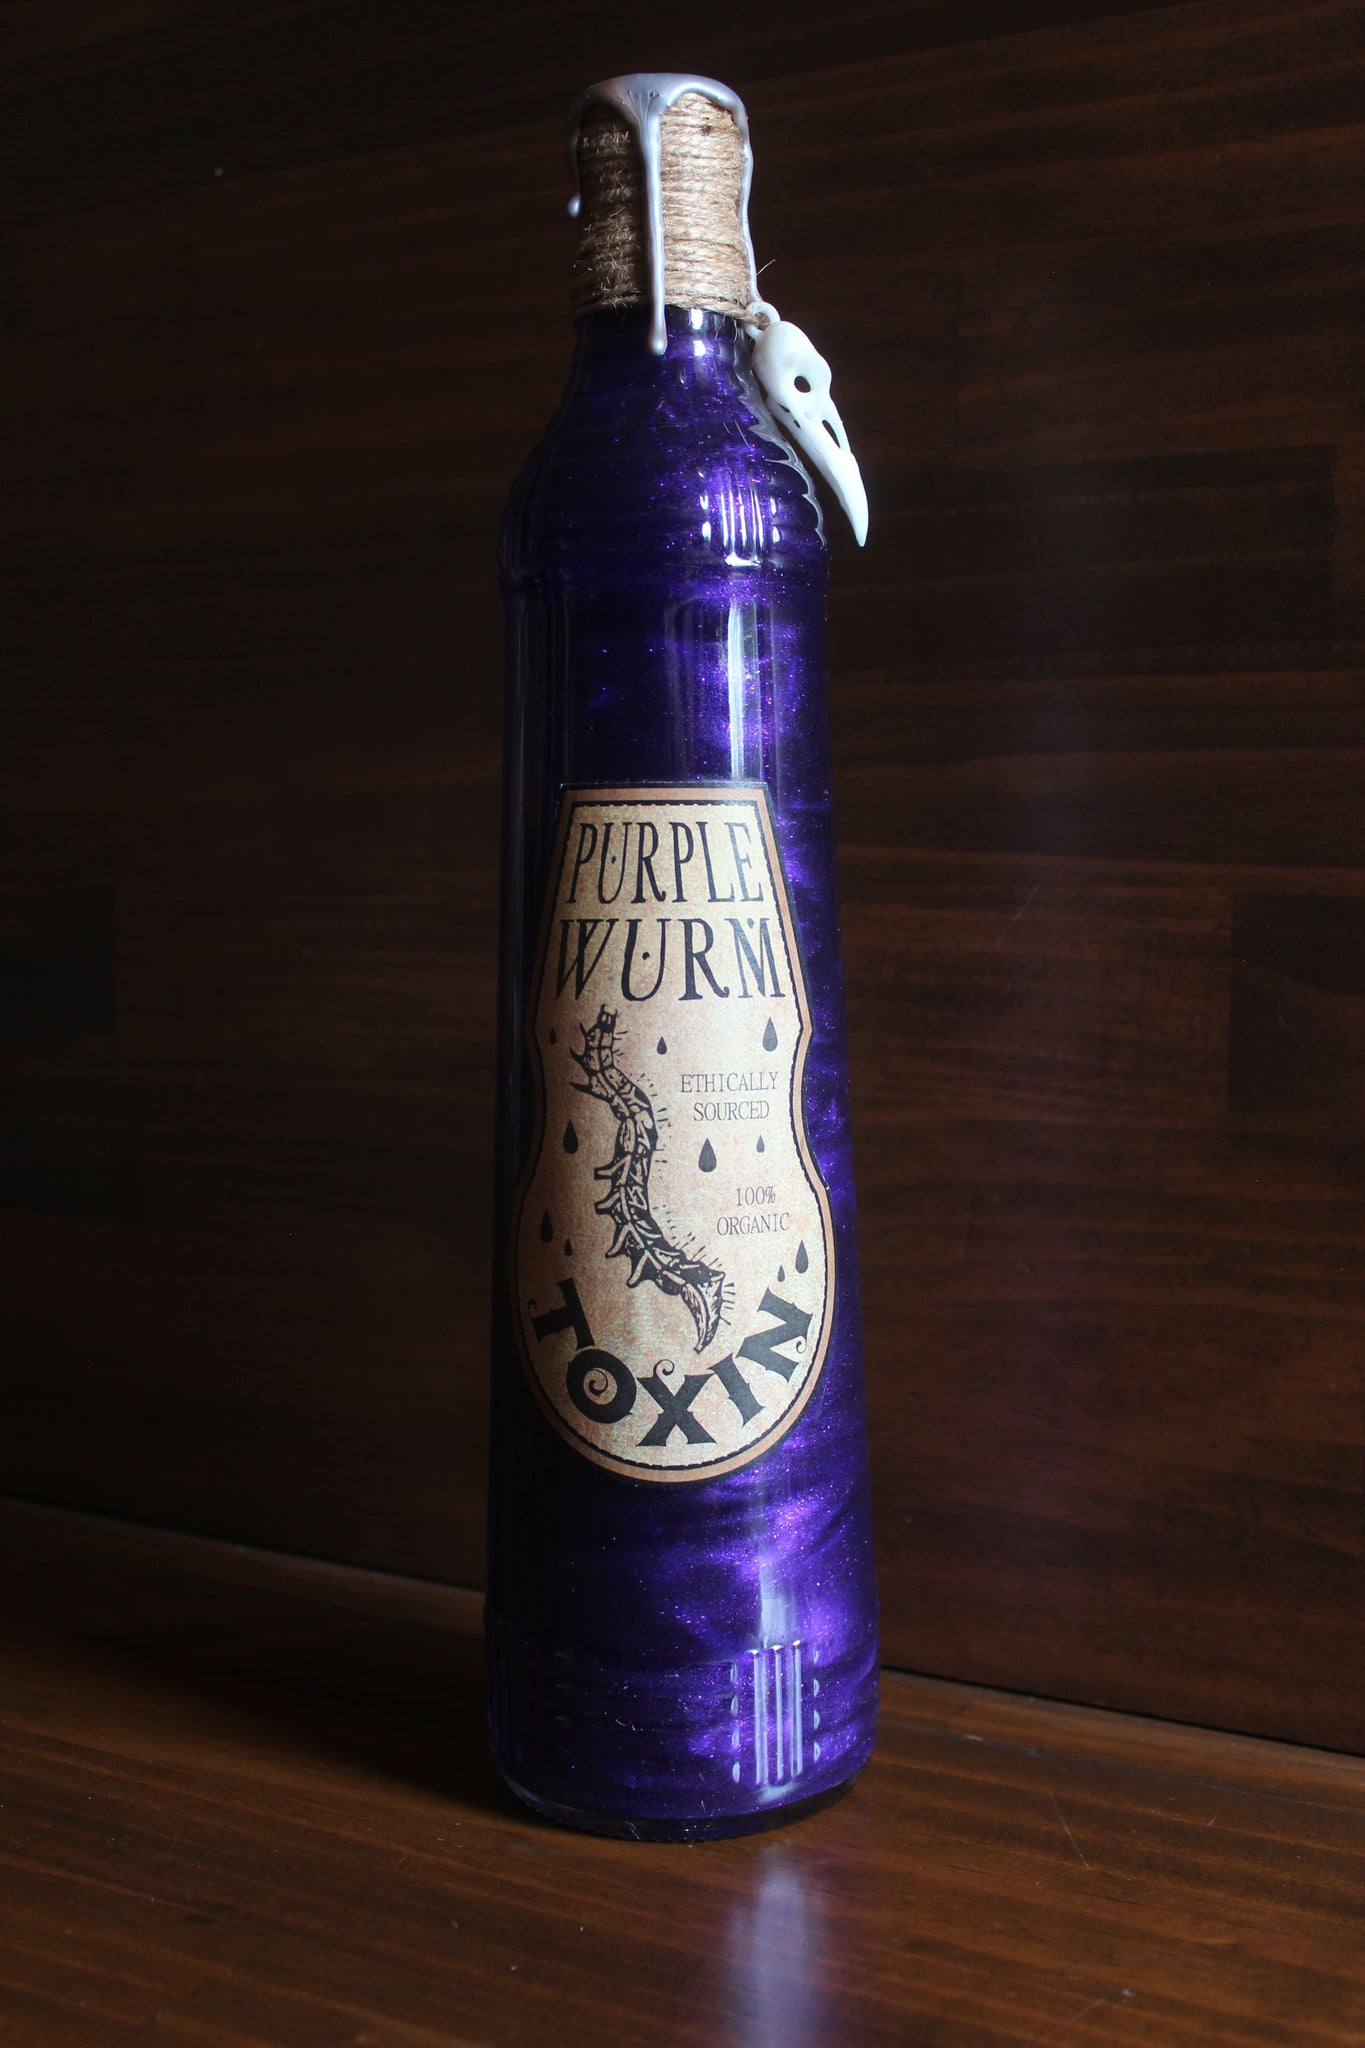 Botella térmica morada diseños cósmicos 500ml Puur Magic Purple - PUURBOTTLE